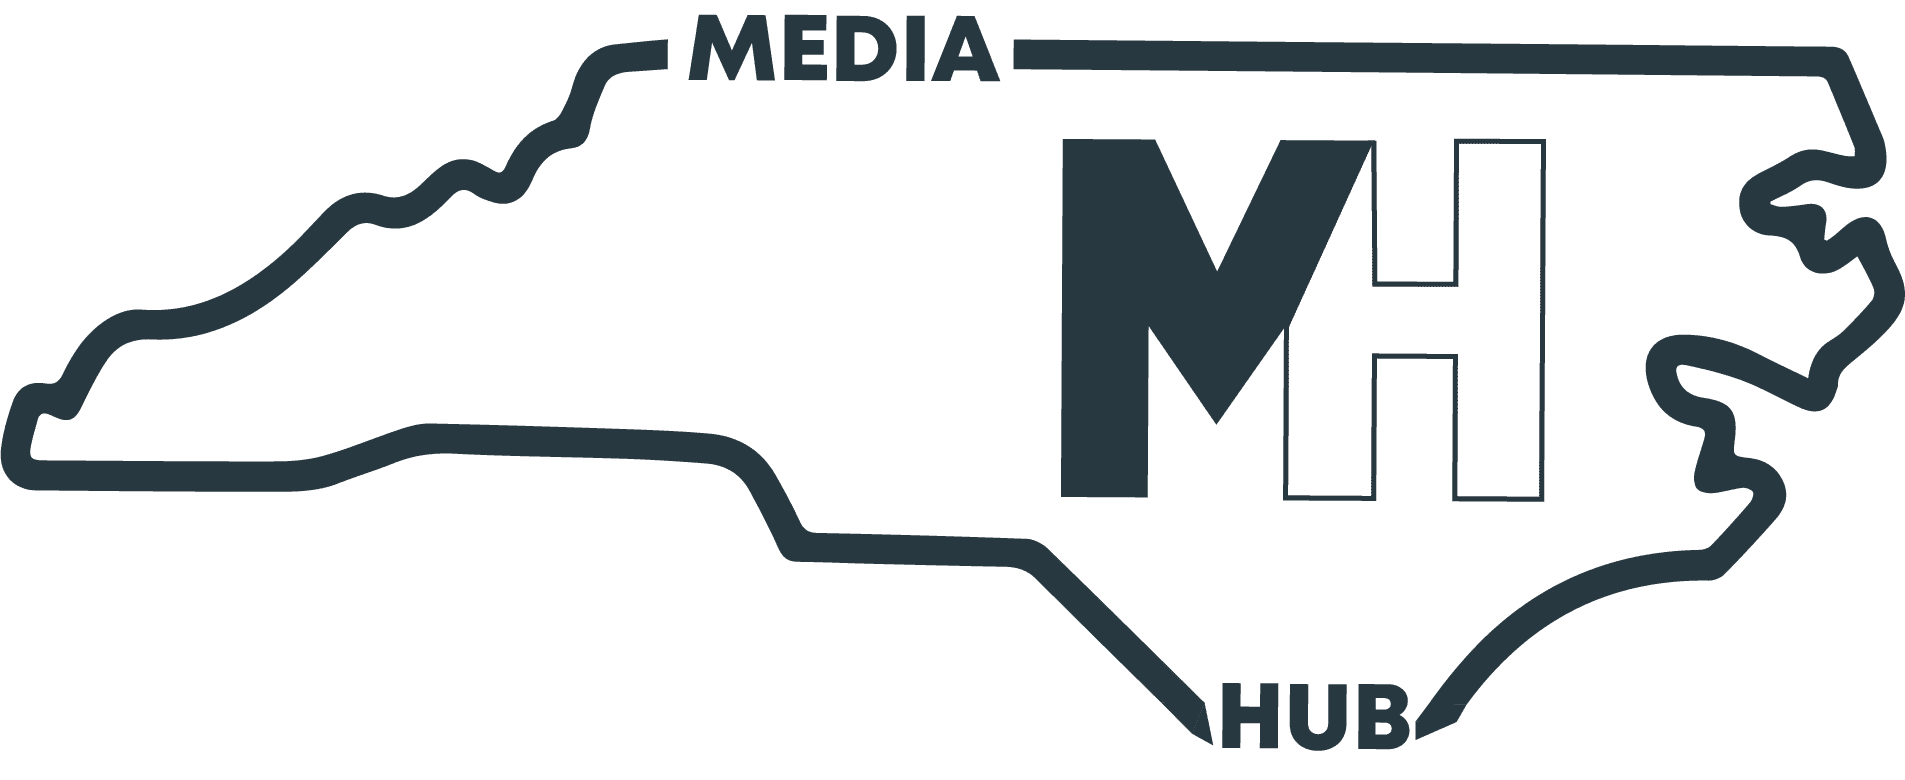 UNC Media Hub